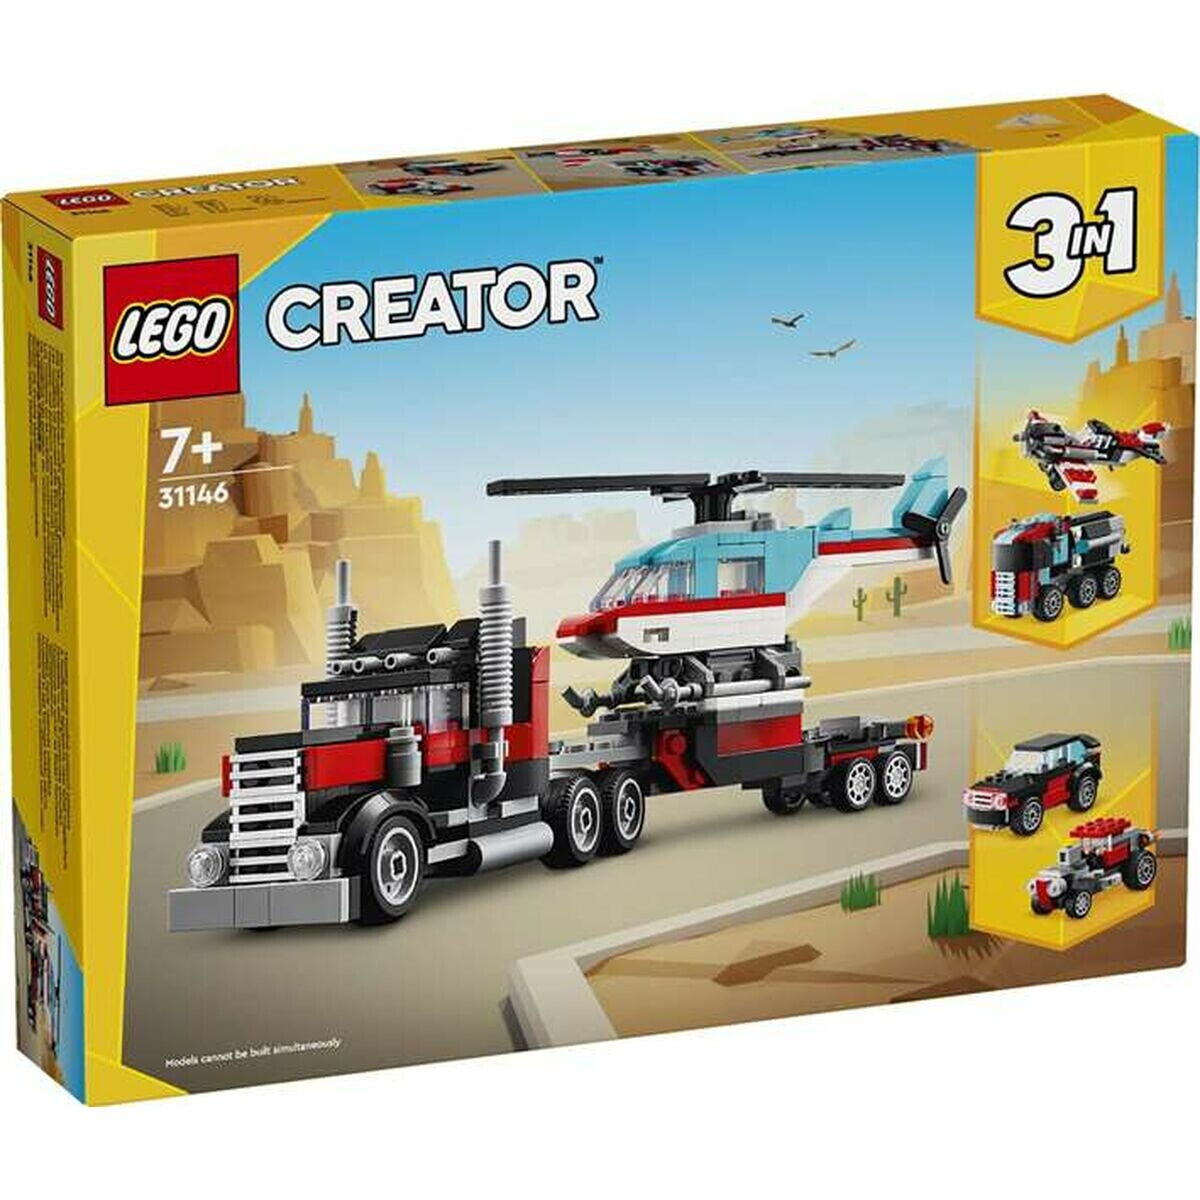 Construction set Lego Creator - 31146 270 Pieces